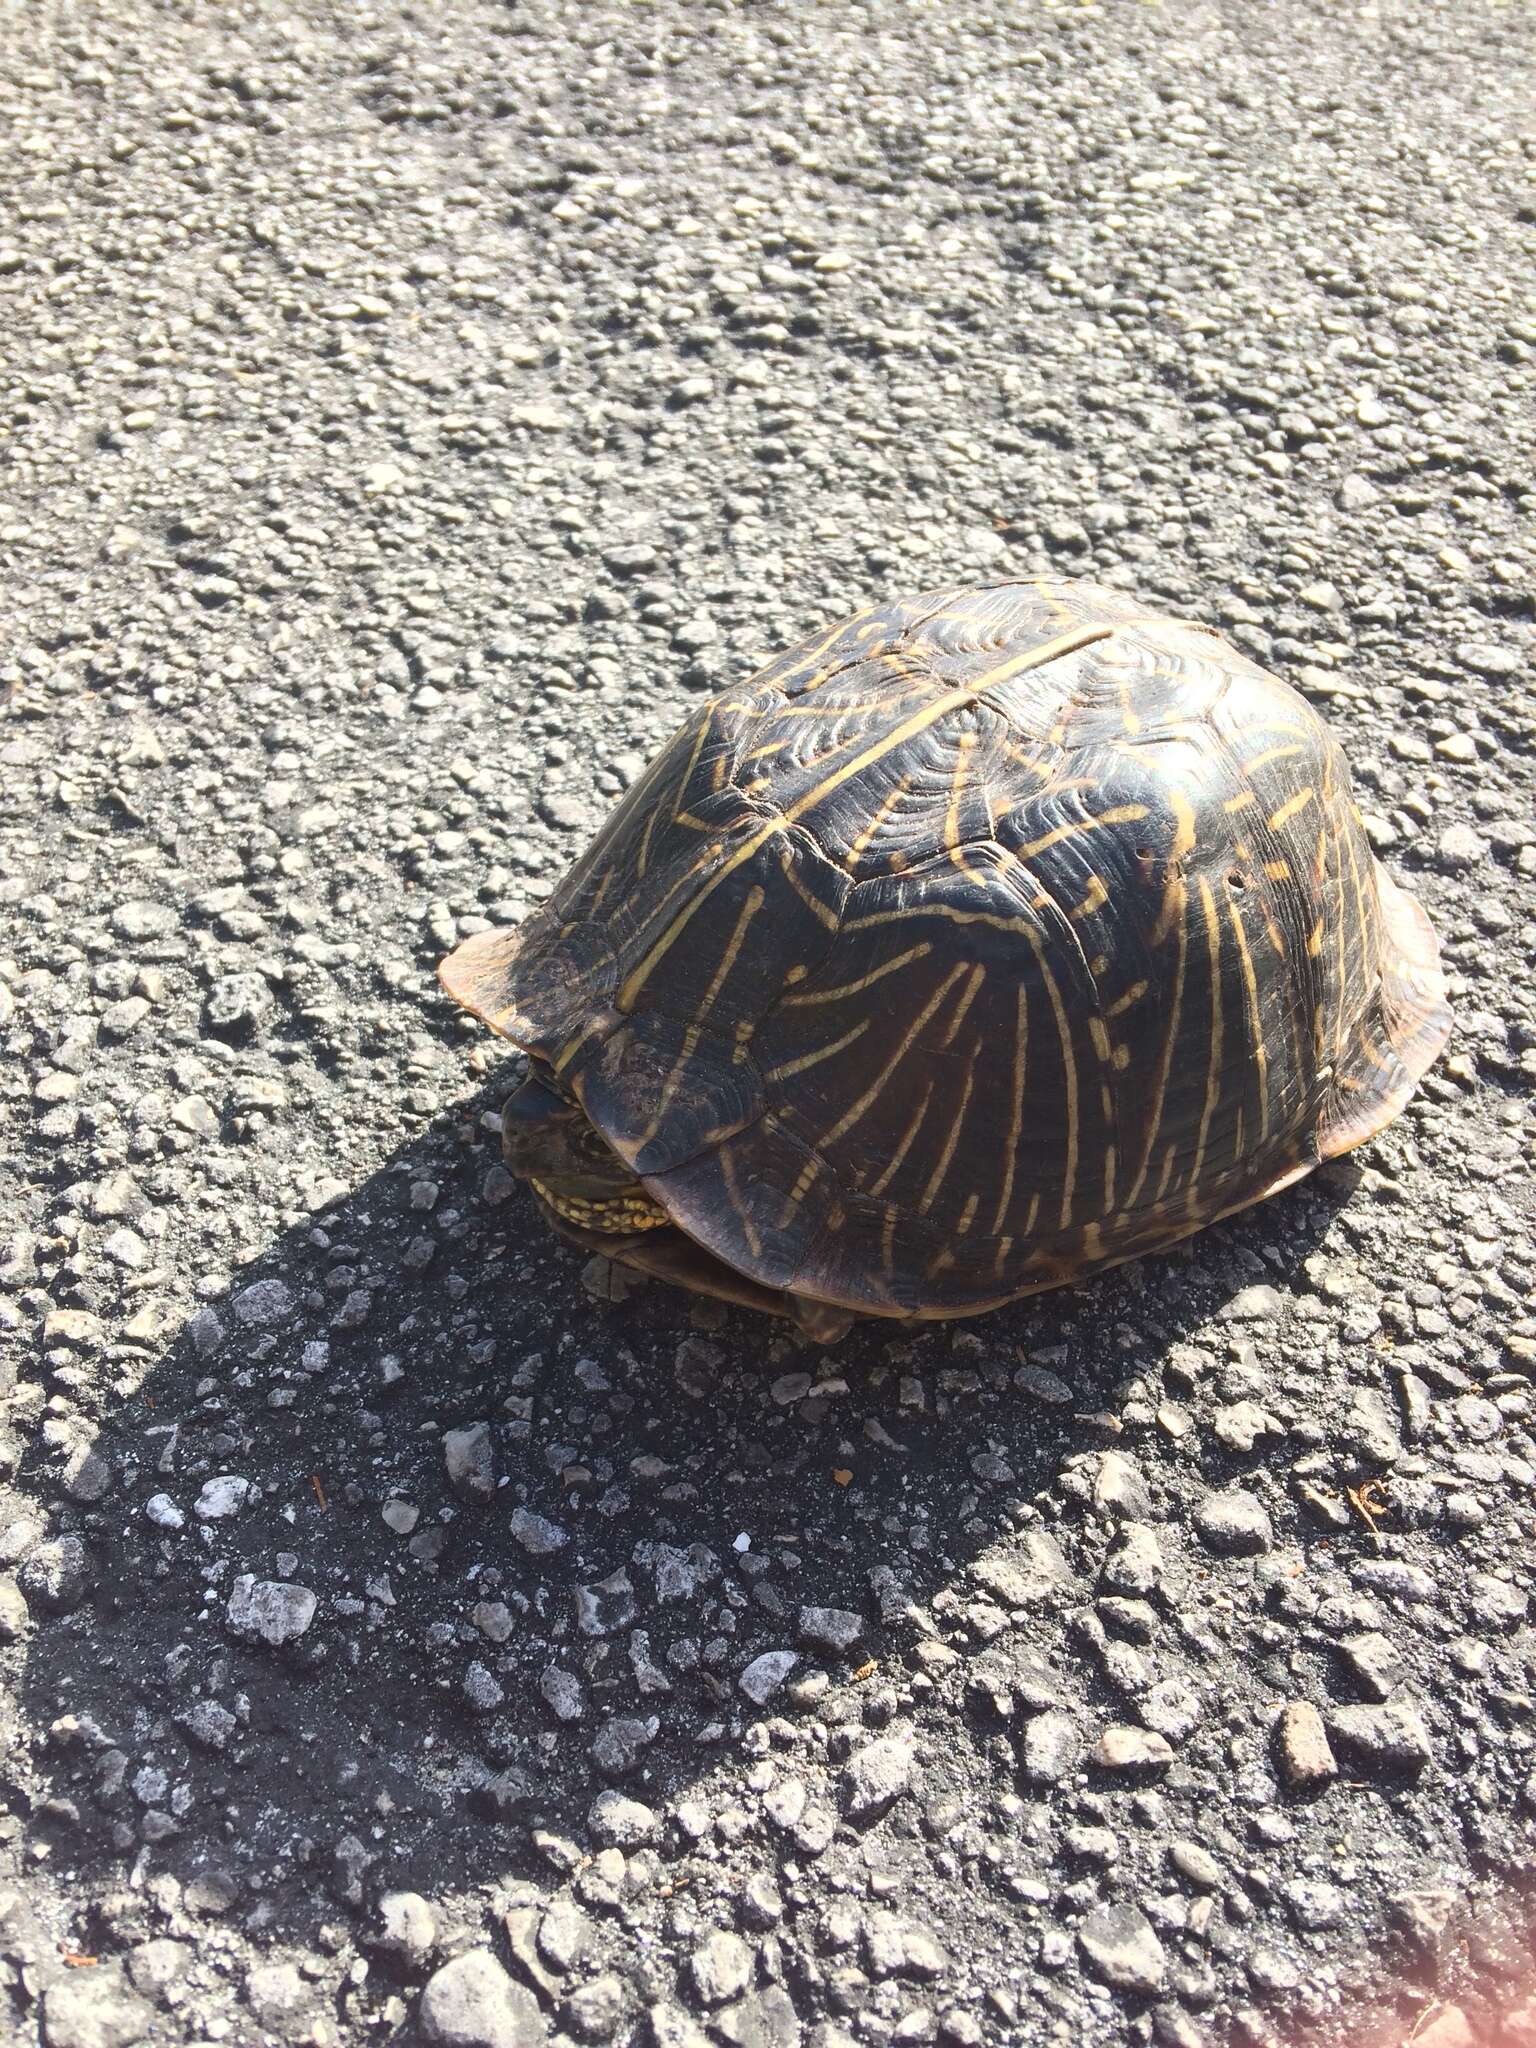 Image of Florida box turtle